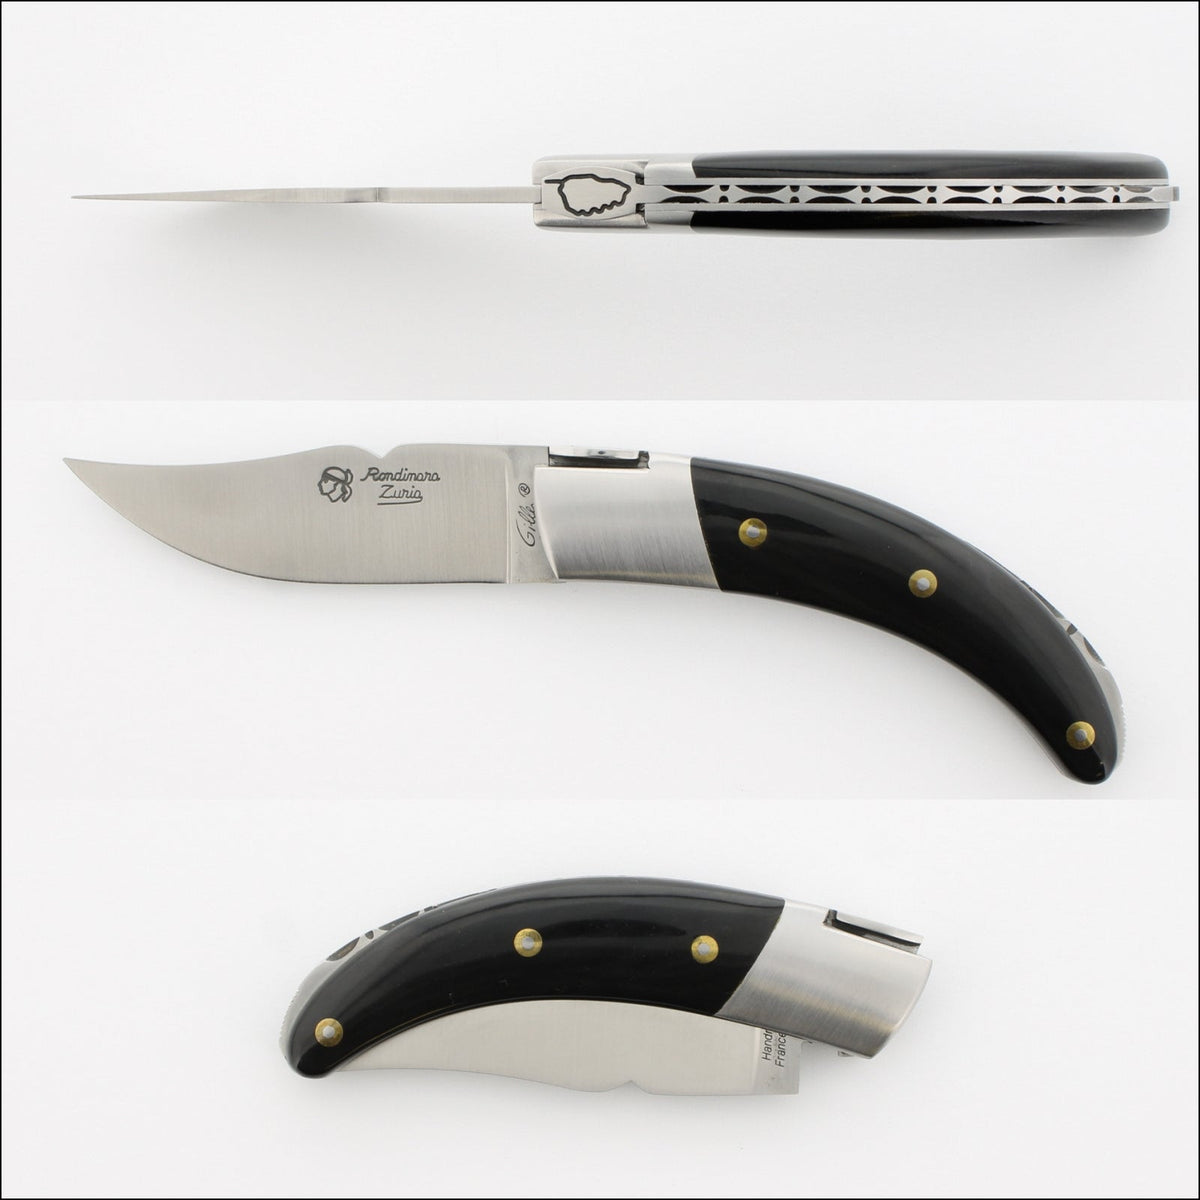 Corsican Rondinara Folding Knife - Black Horn Tip